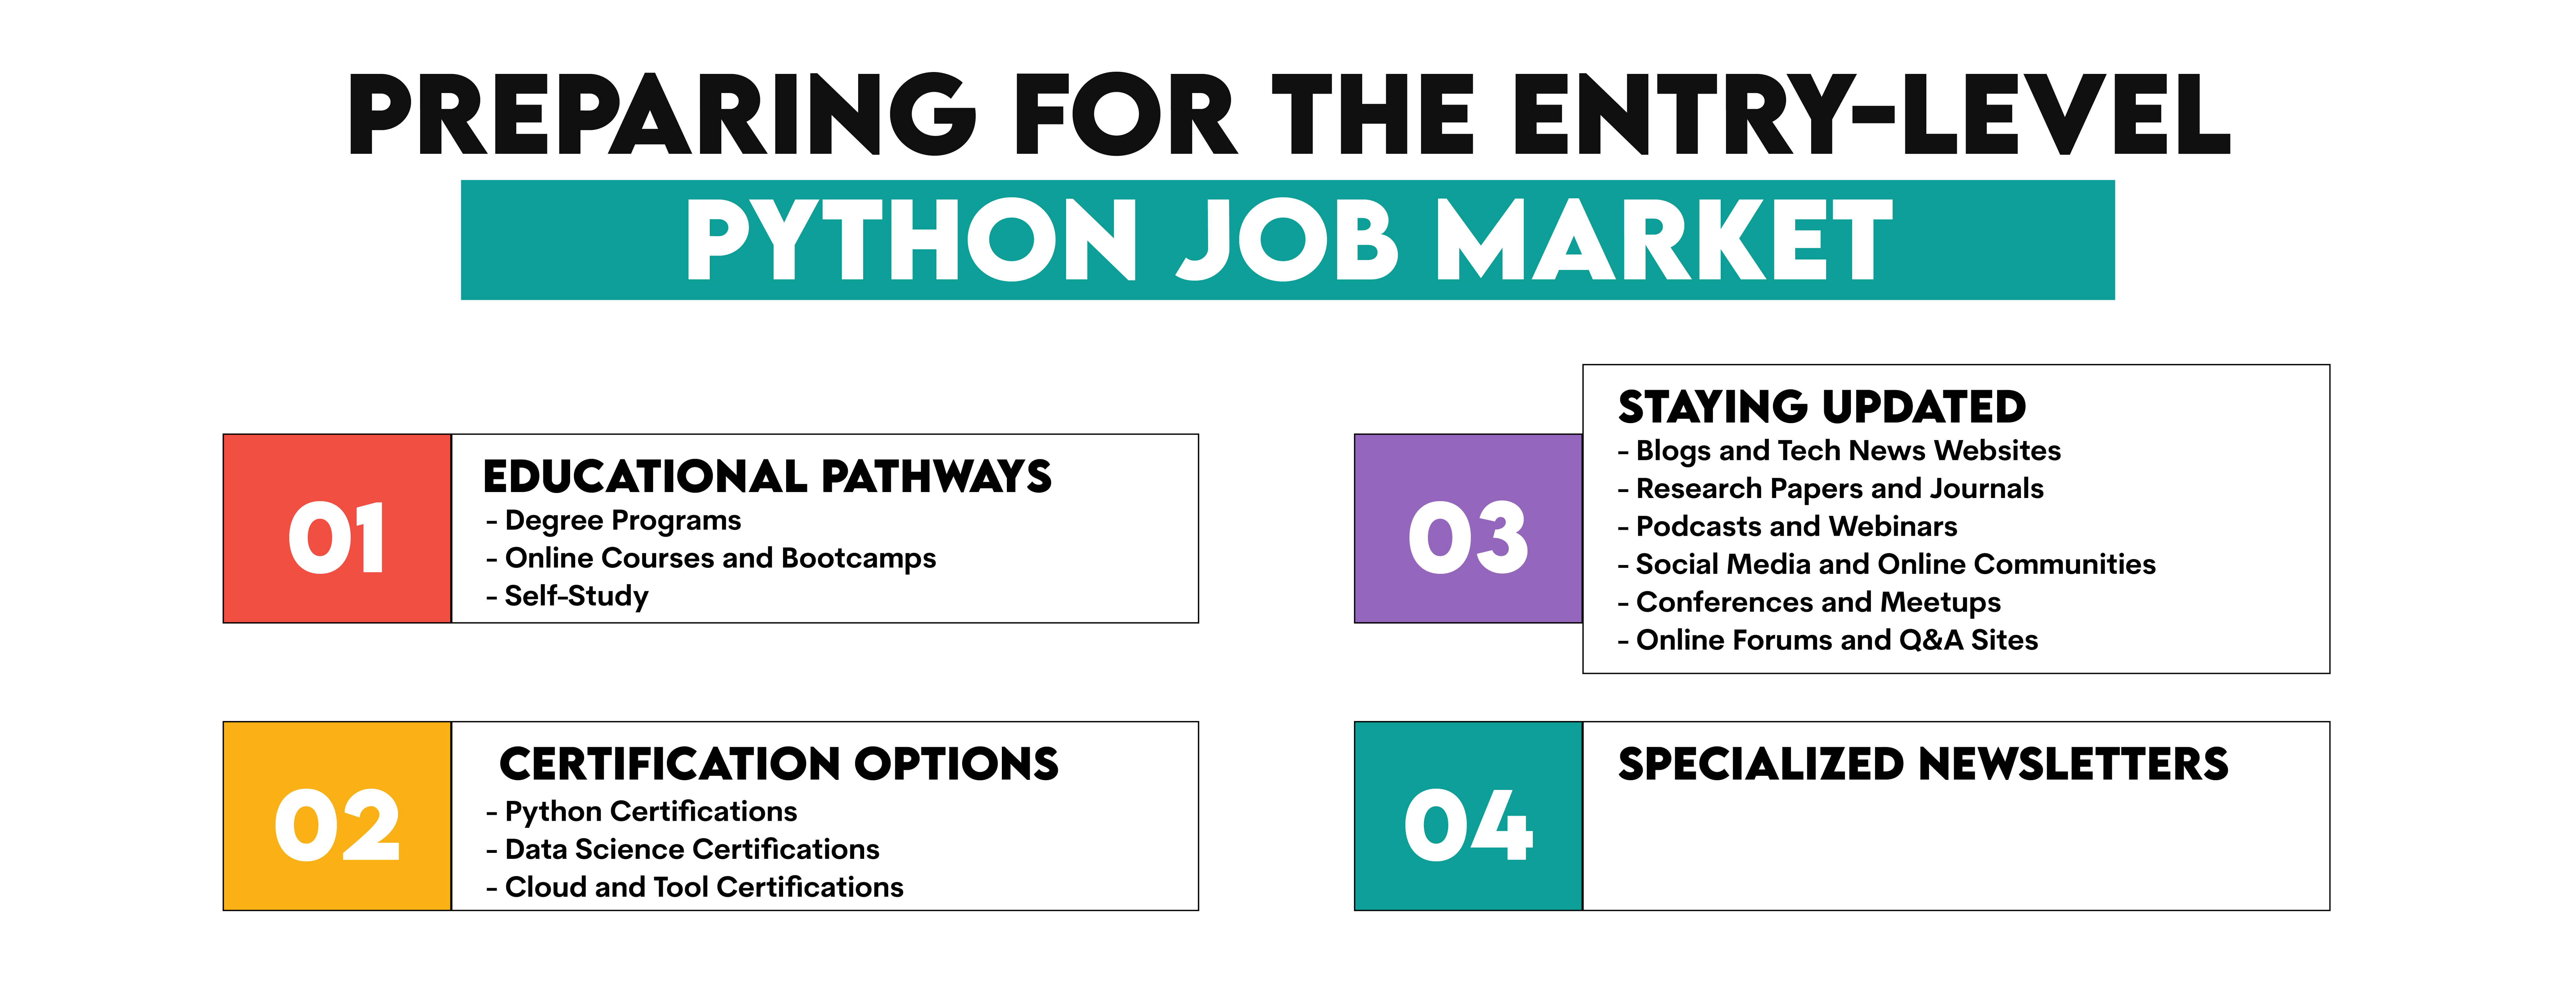 Preparing for the Entry Level Python Job Market